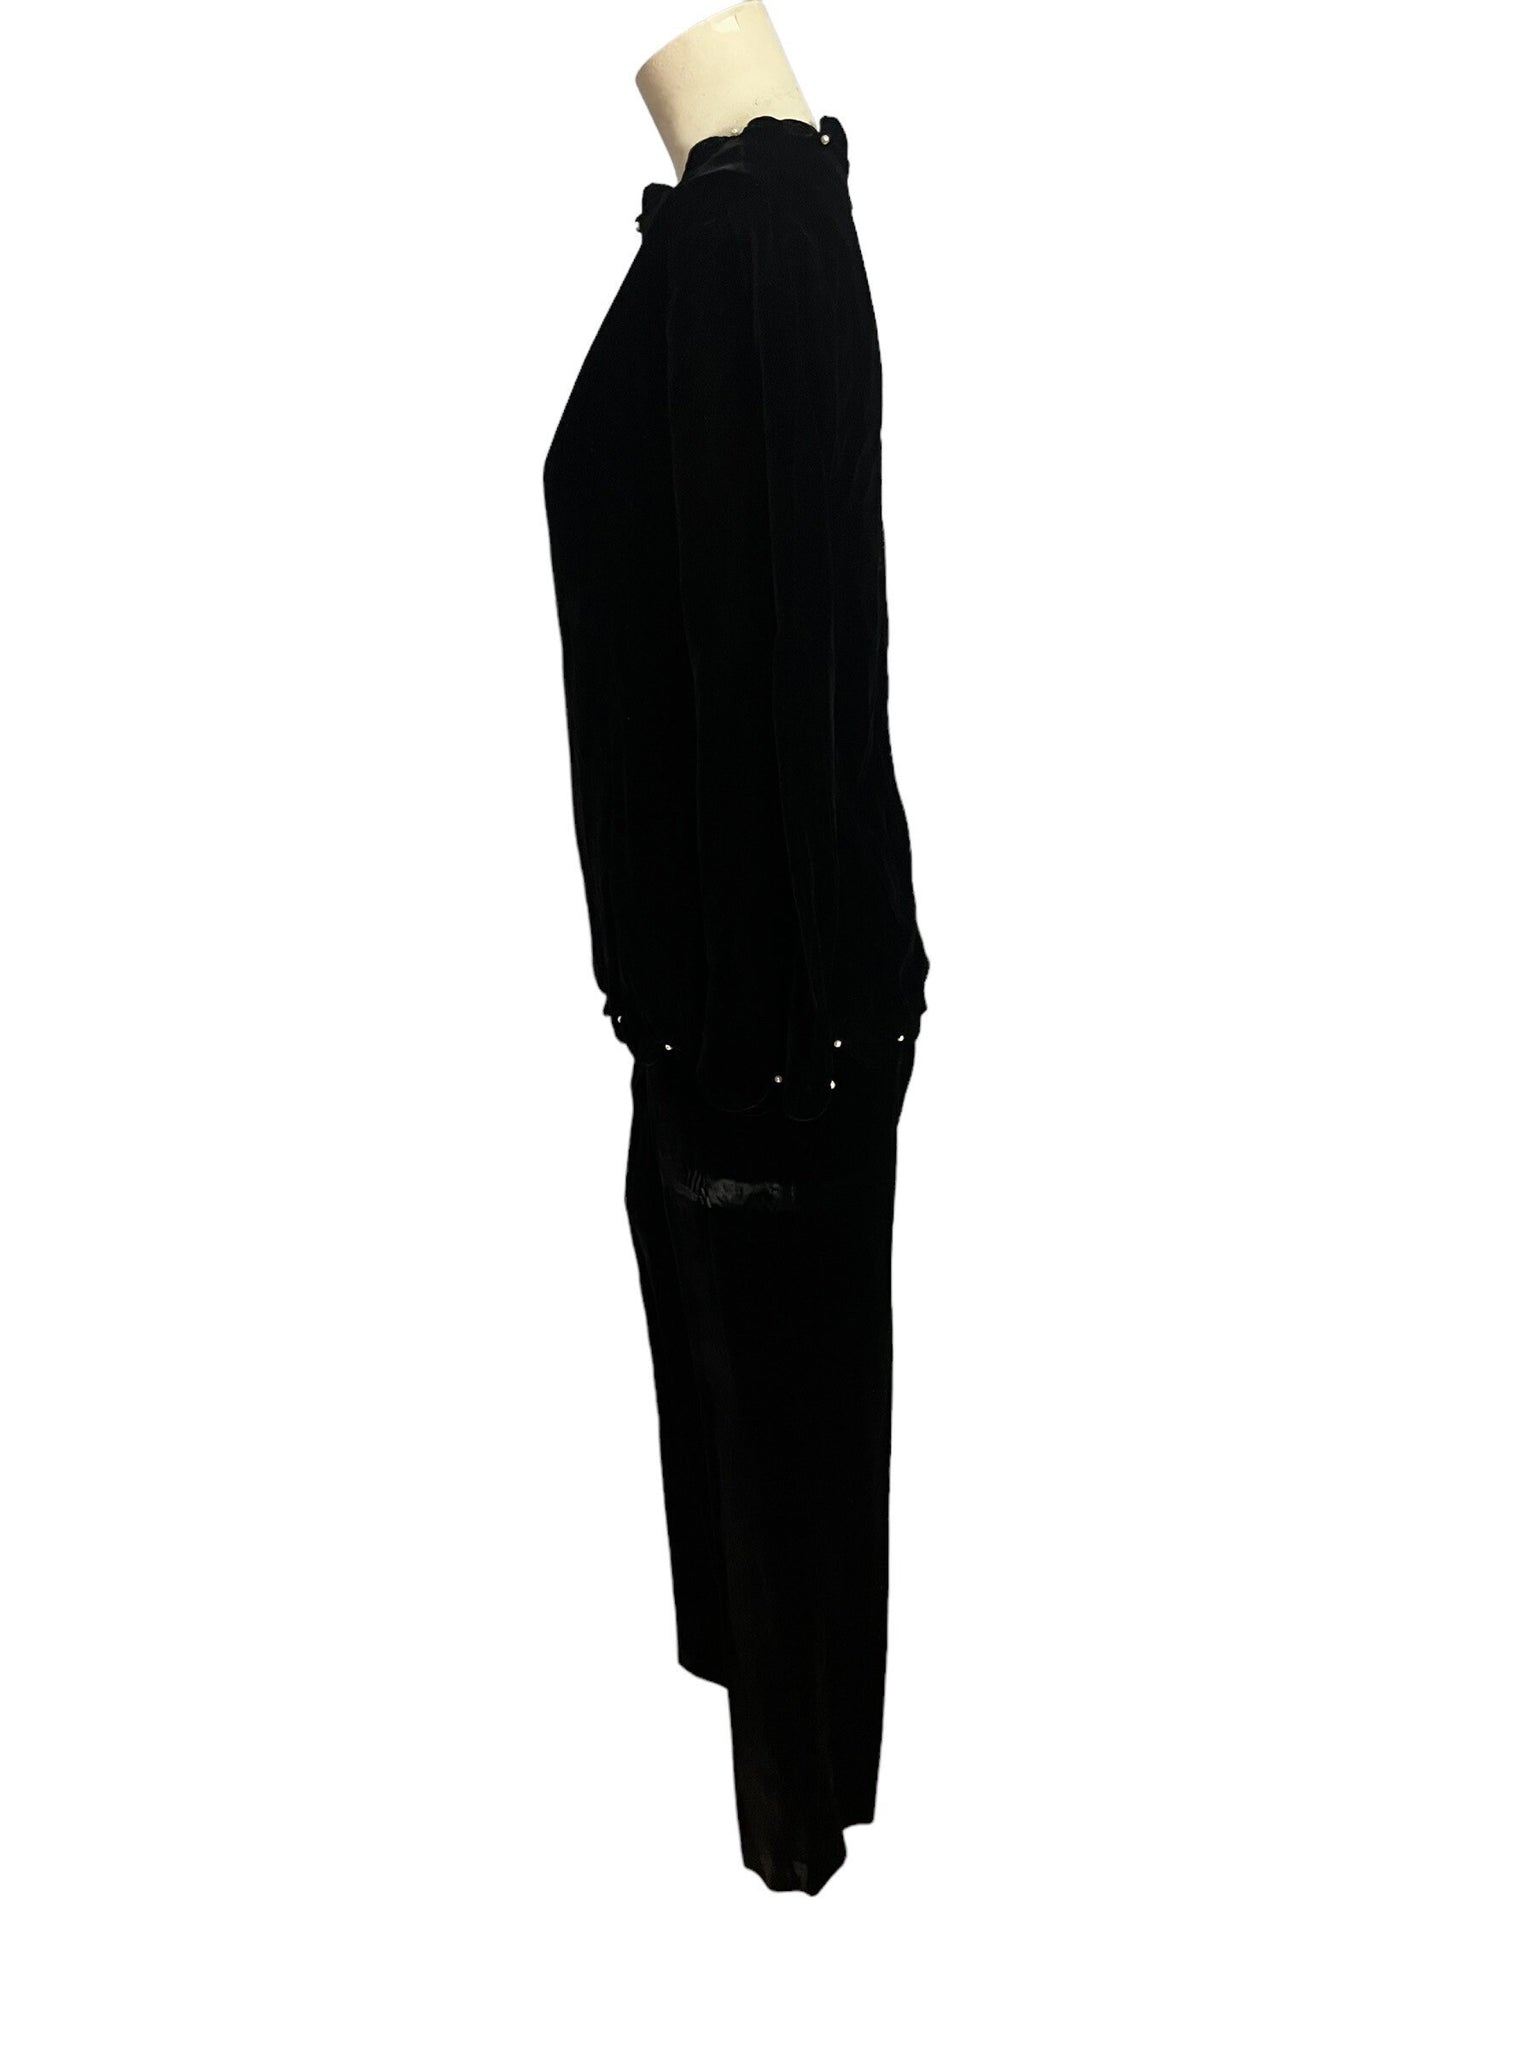 Vintage 80's black velvet suit costume M